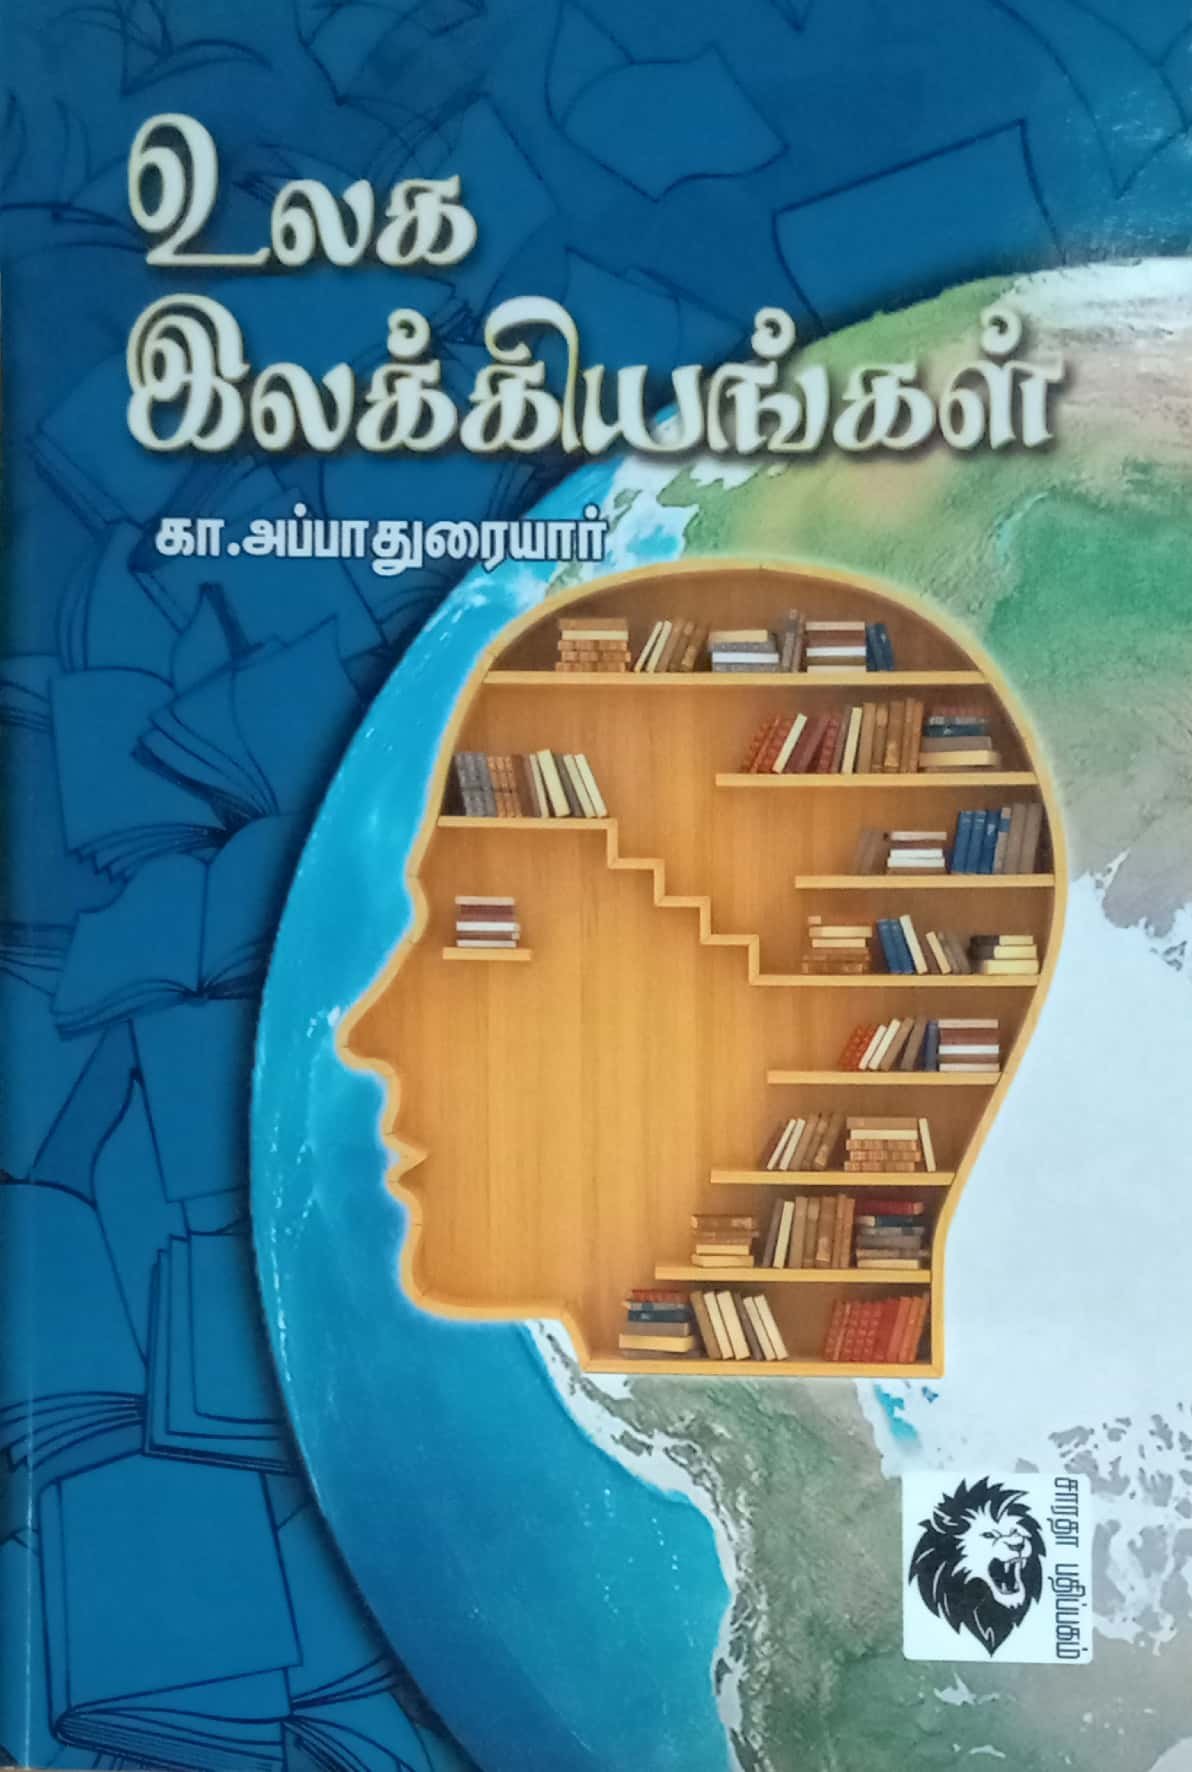 P N S Book Stall in Choolaimedu,Chennai - Best Second Hand Book Shops in  Chennai - Justdial